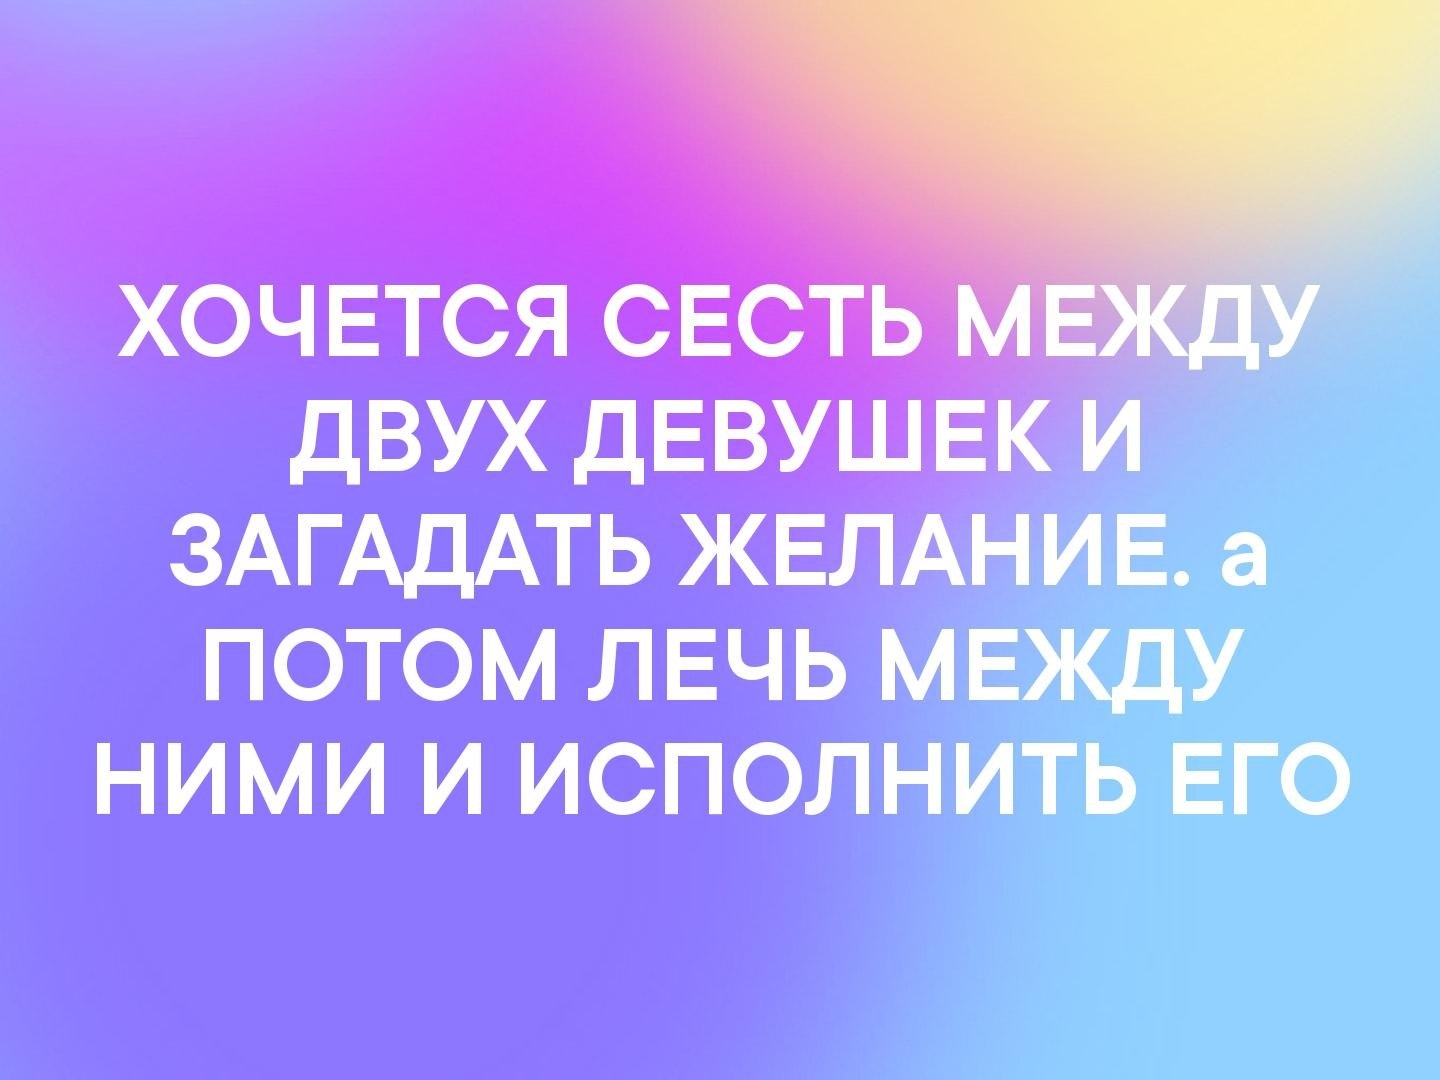 Vlad Anfin - 23  2019  03:54